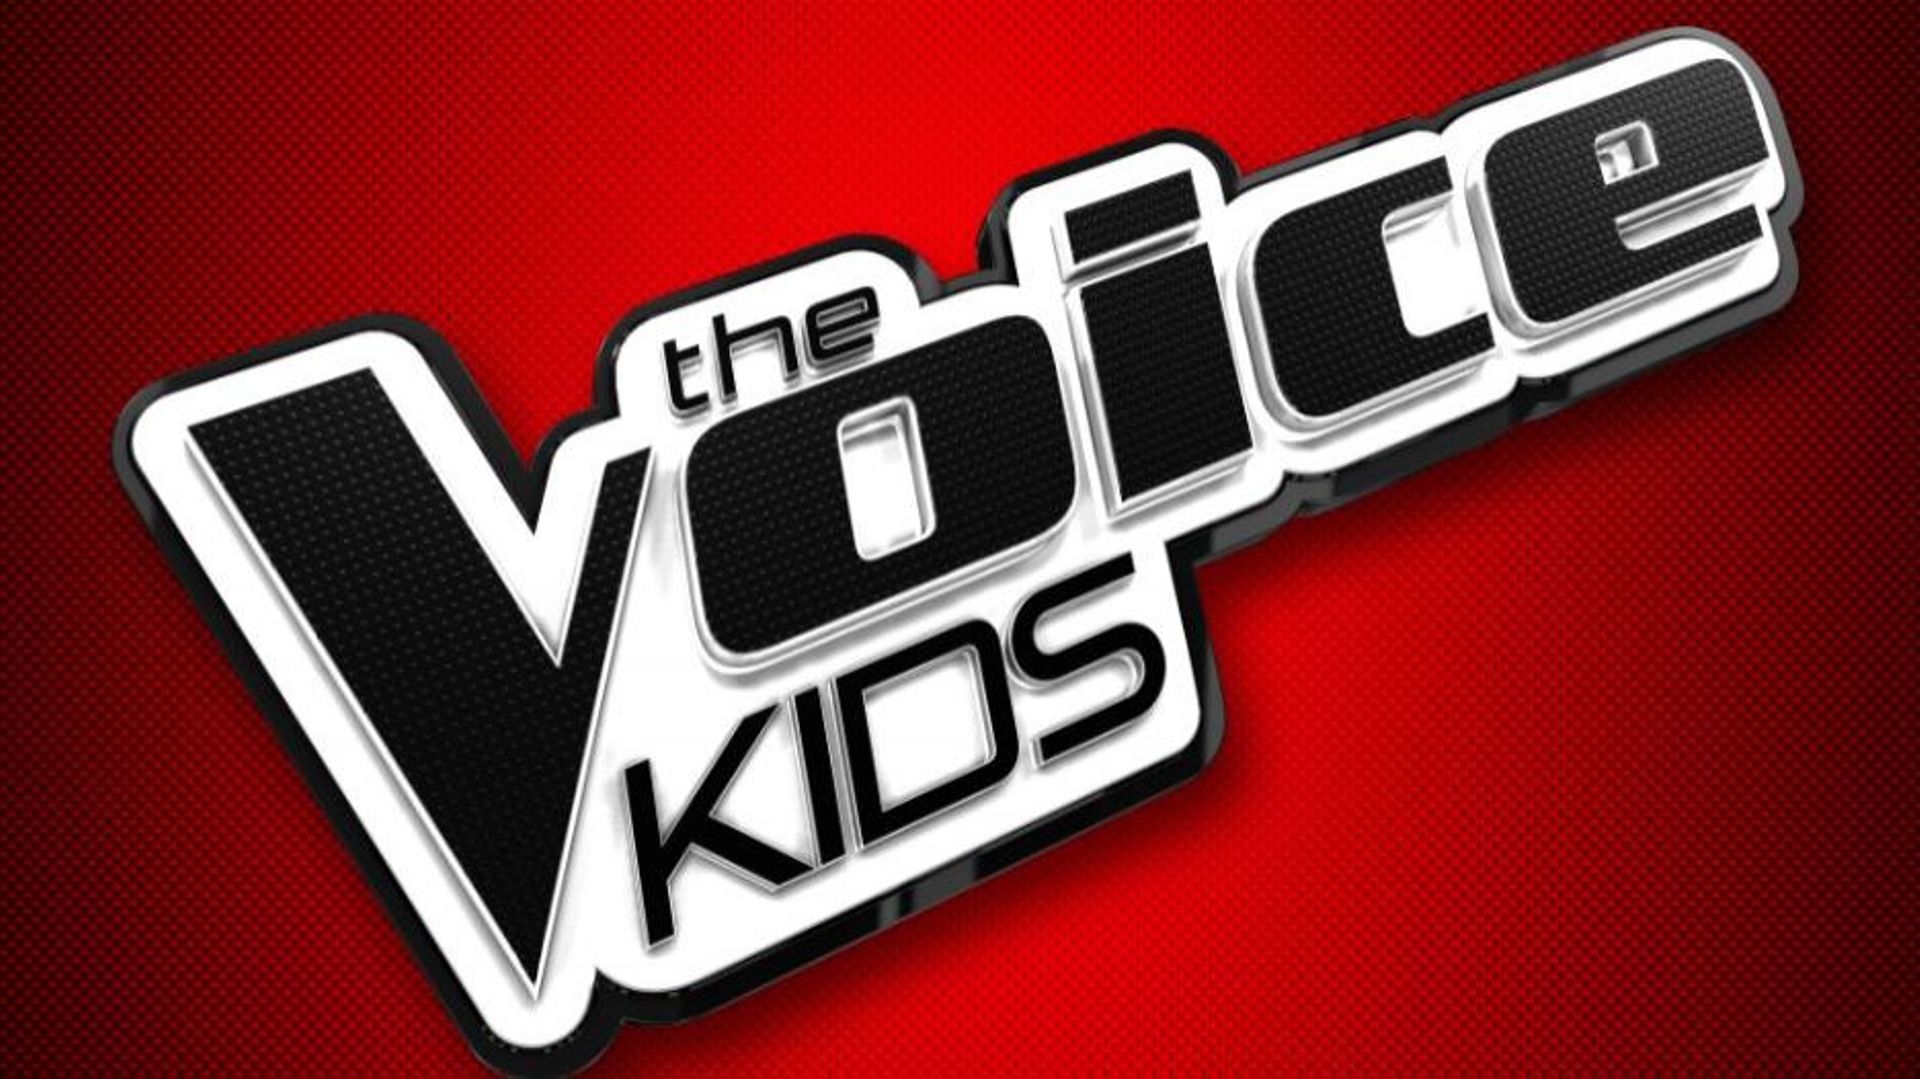 the-voice-kids-comment-assister-aux-blind-auditions